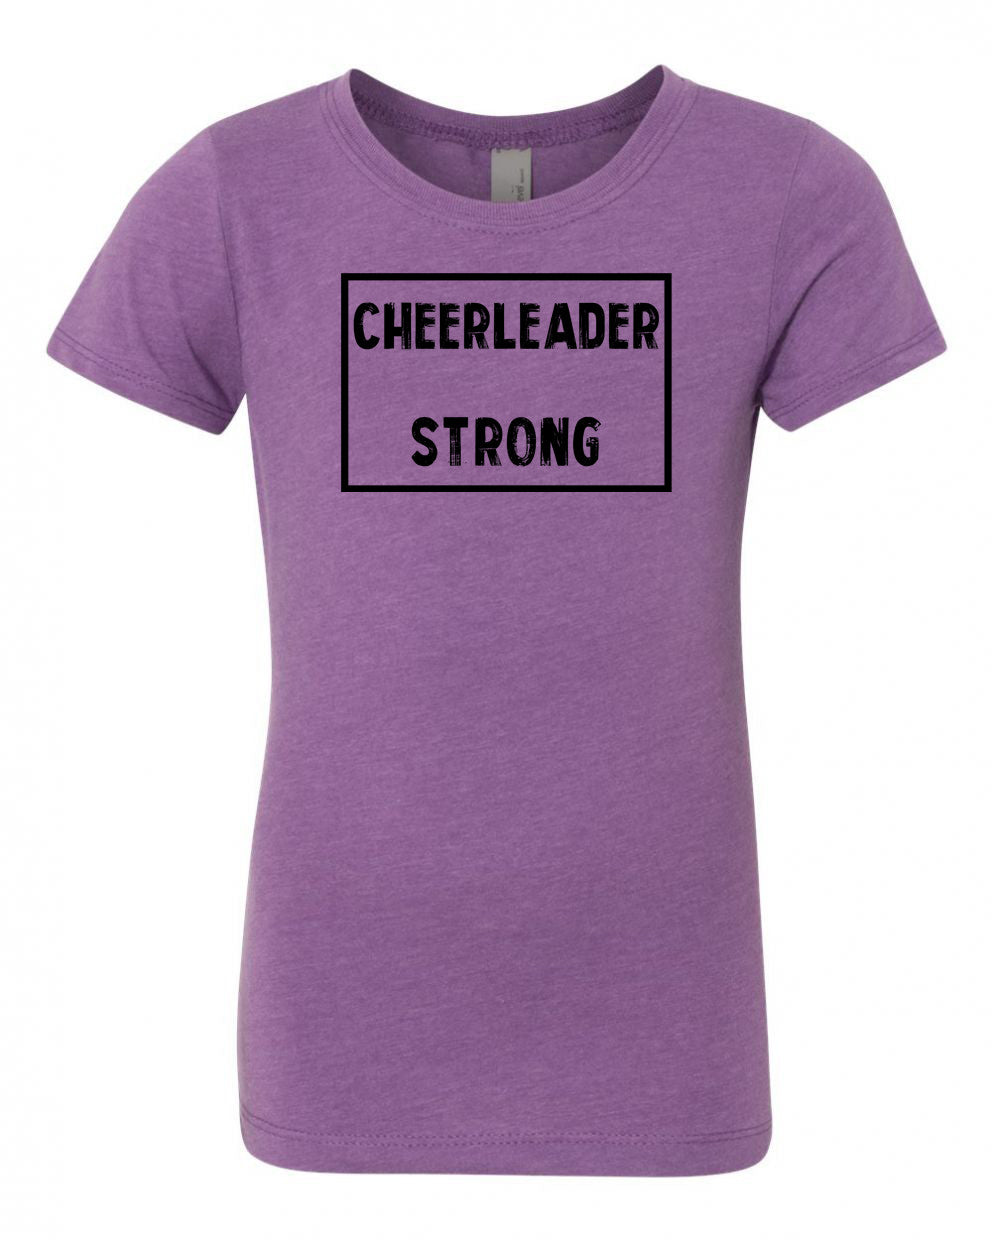 Cheerleader Strong Girls T-Shirt Purple Berry